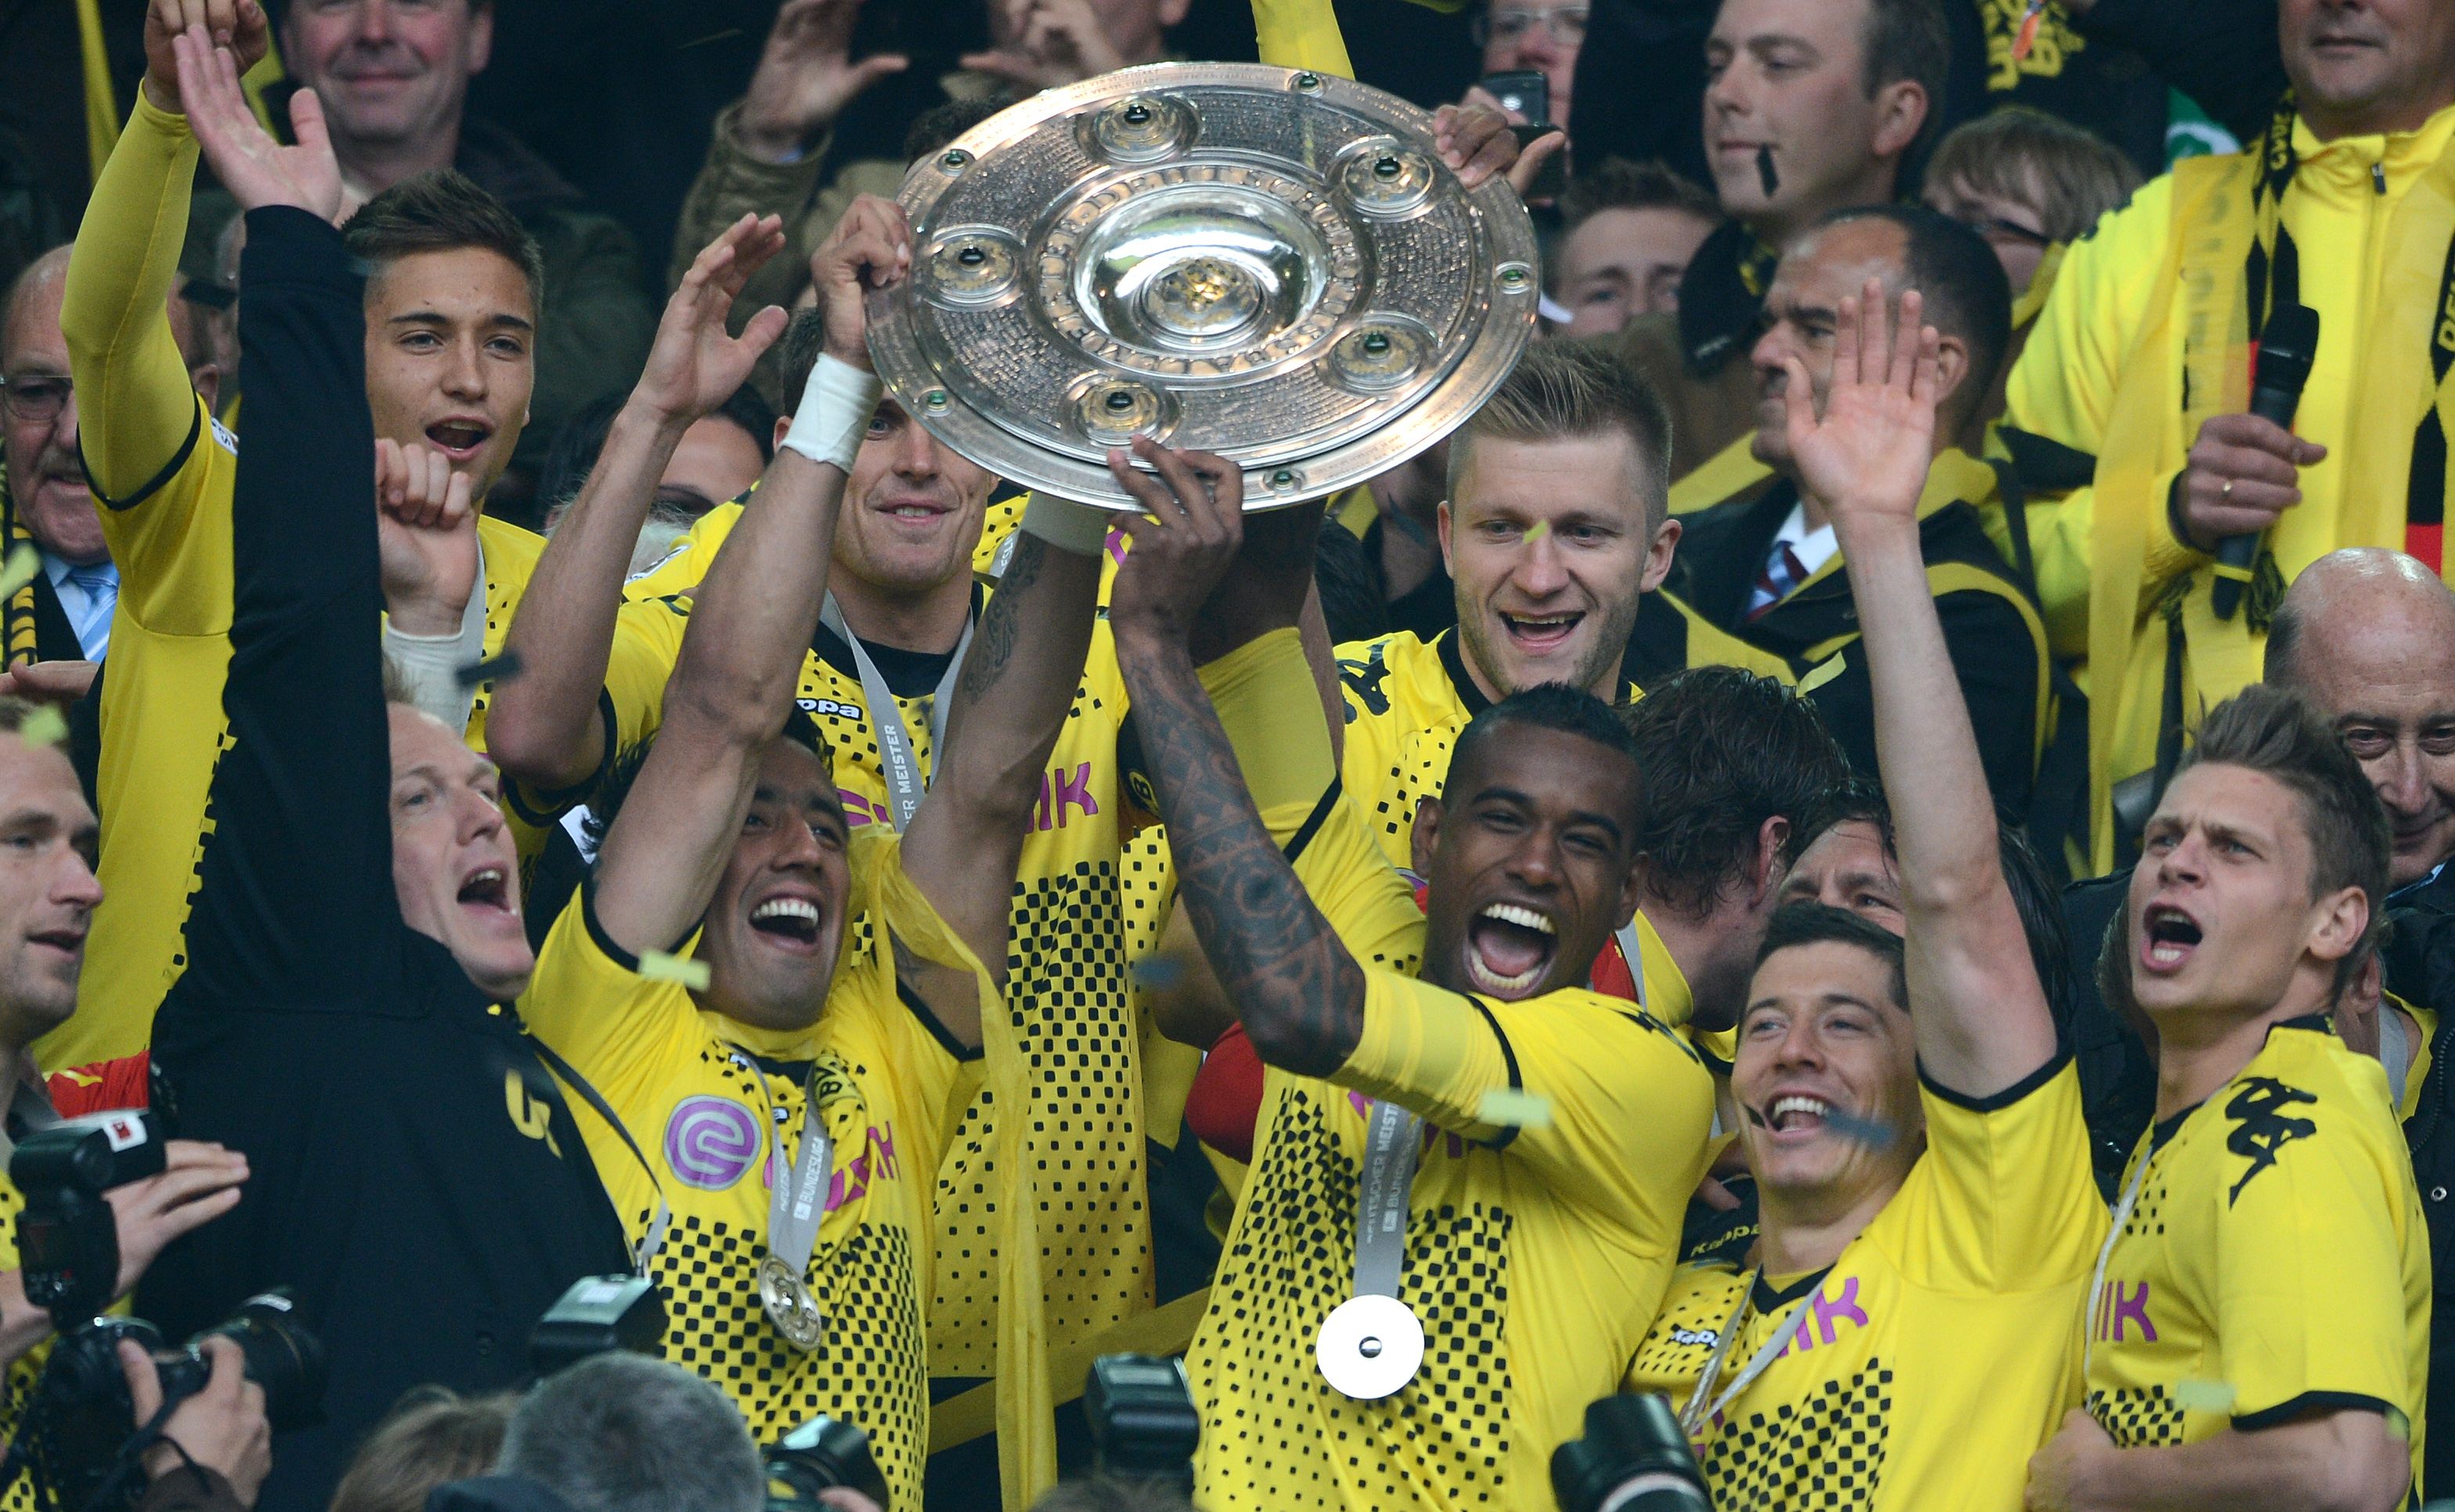 Football Tracker: Dortmund hosting Werder Bremen as club football returns  in style